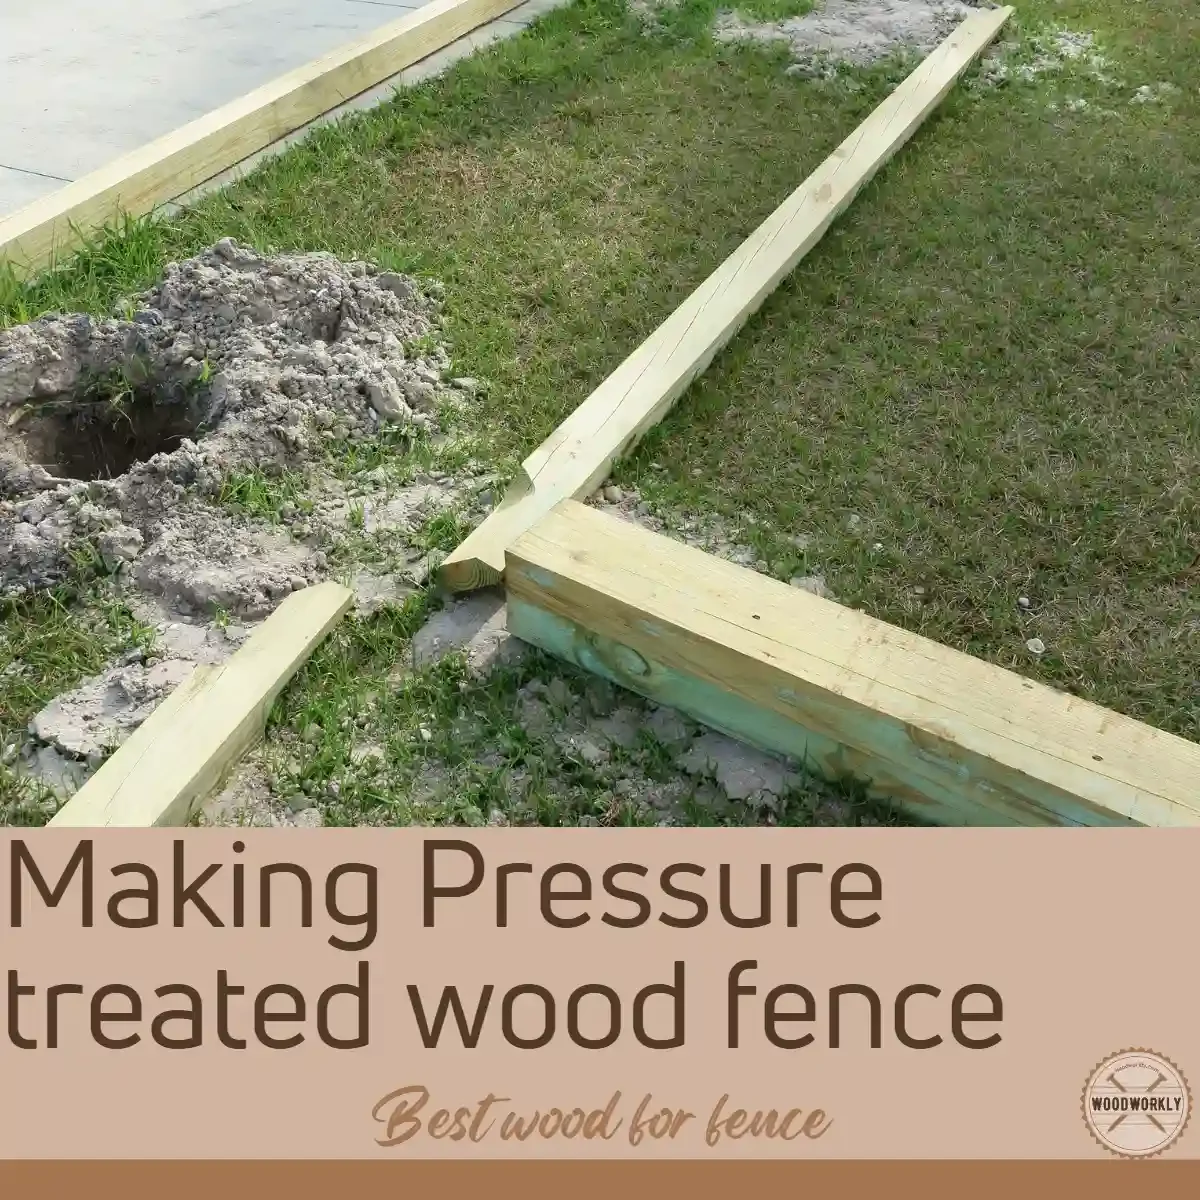 Making Pressure treated wood fence